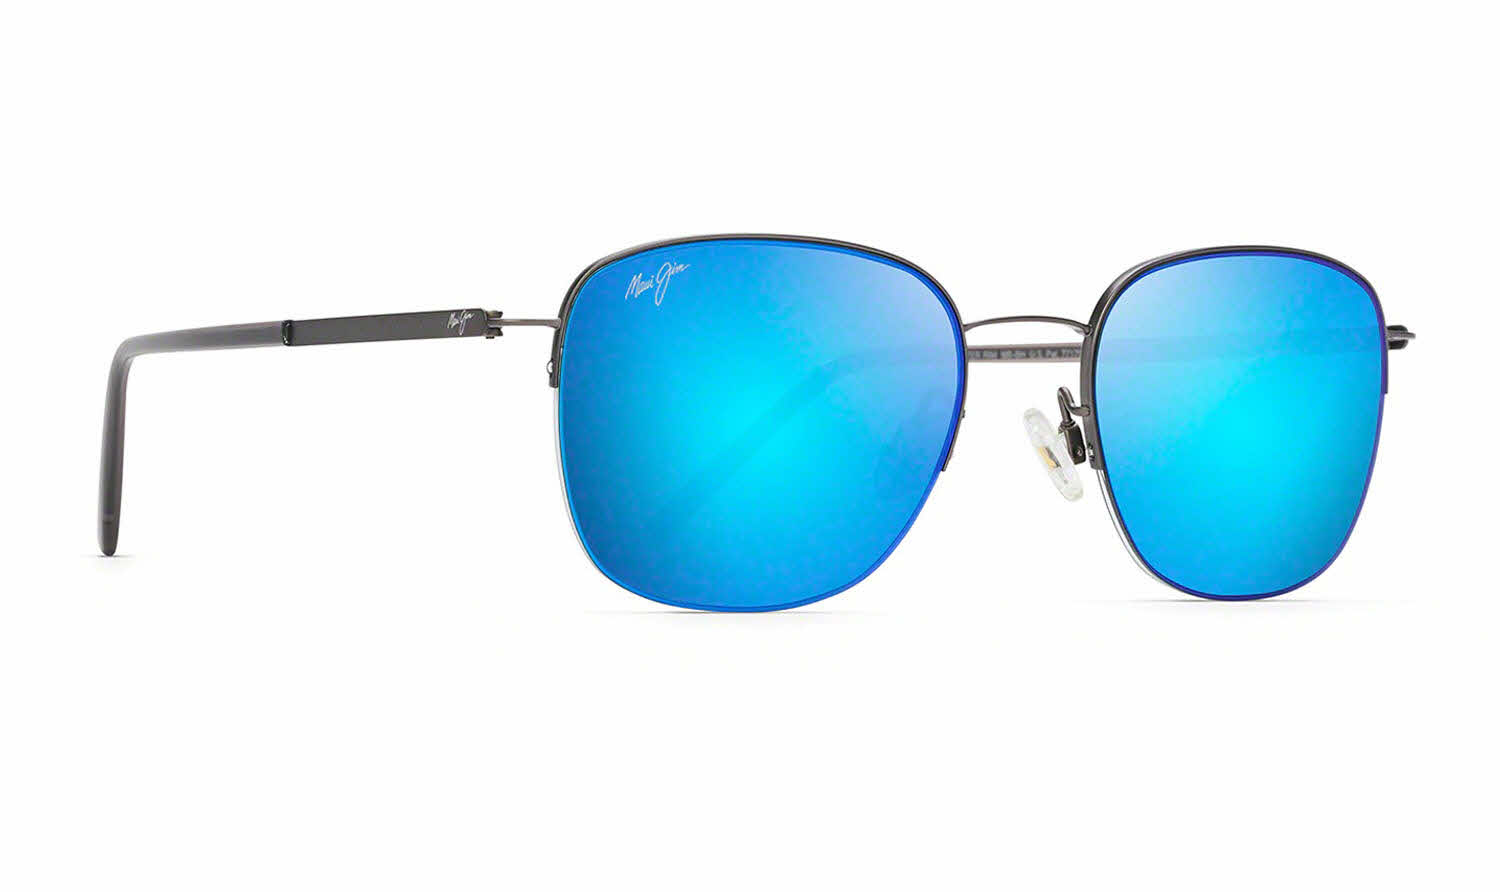 Maui Jim Crater Rim-824 Sunglasses